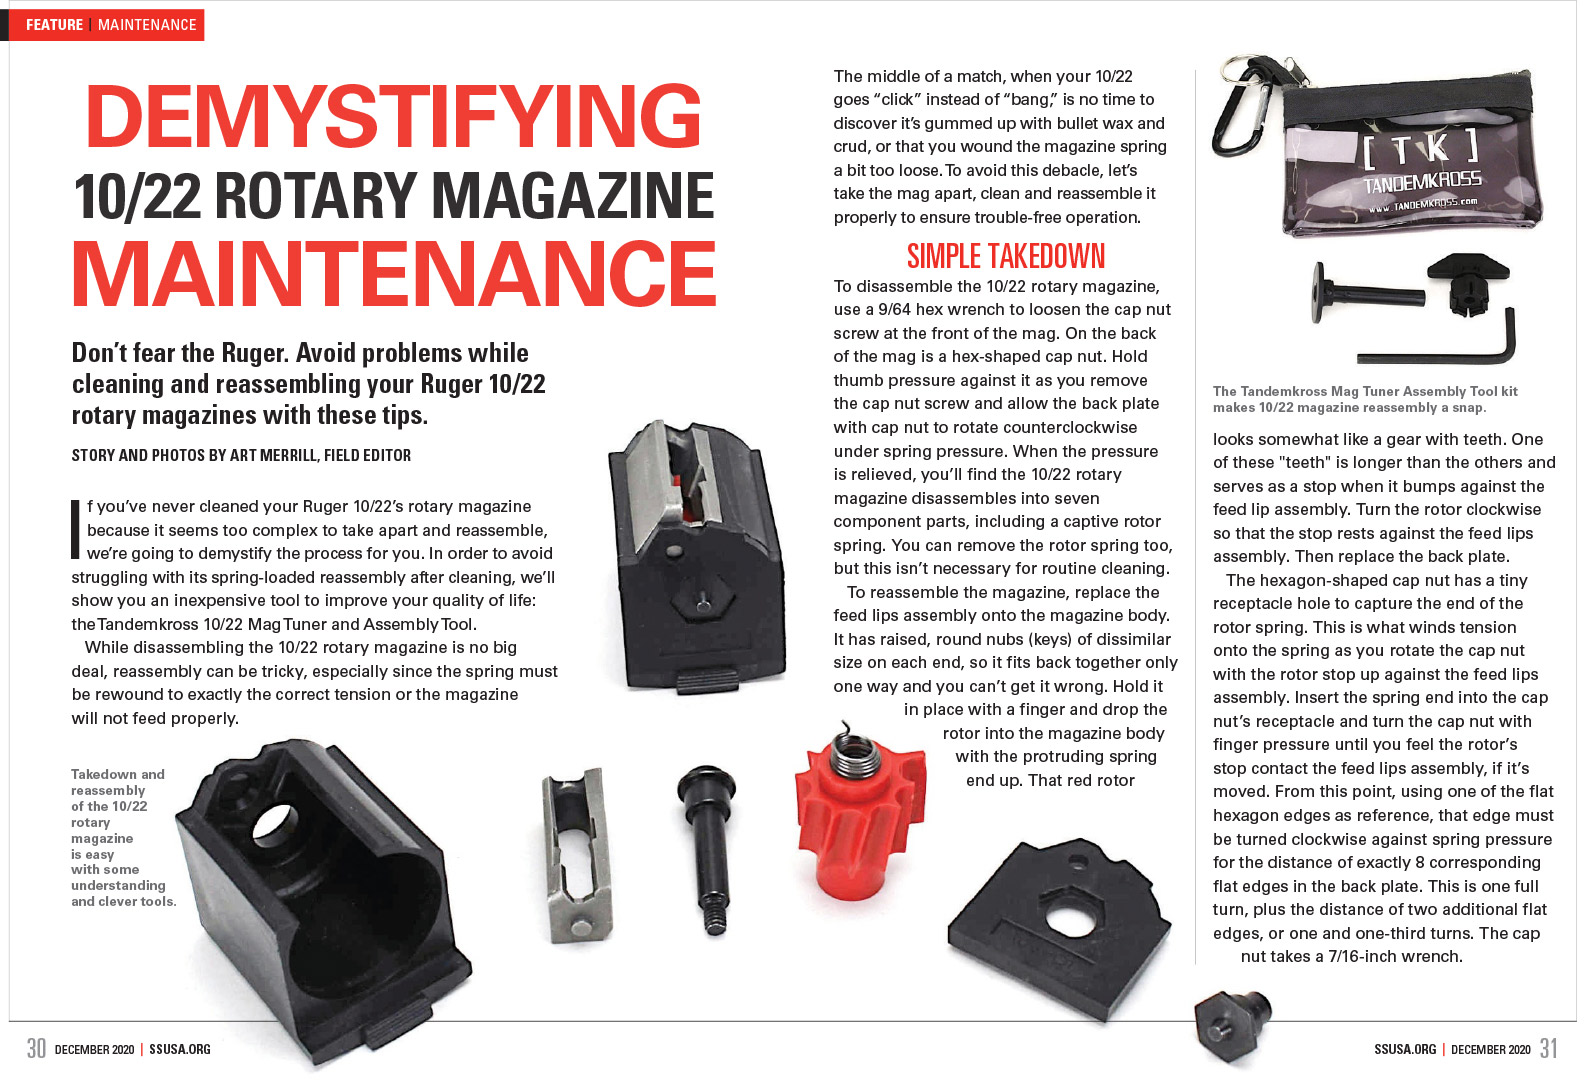 Ruger 10/22 rotary magazine maintenance